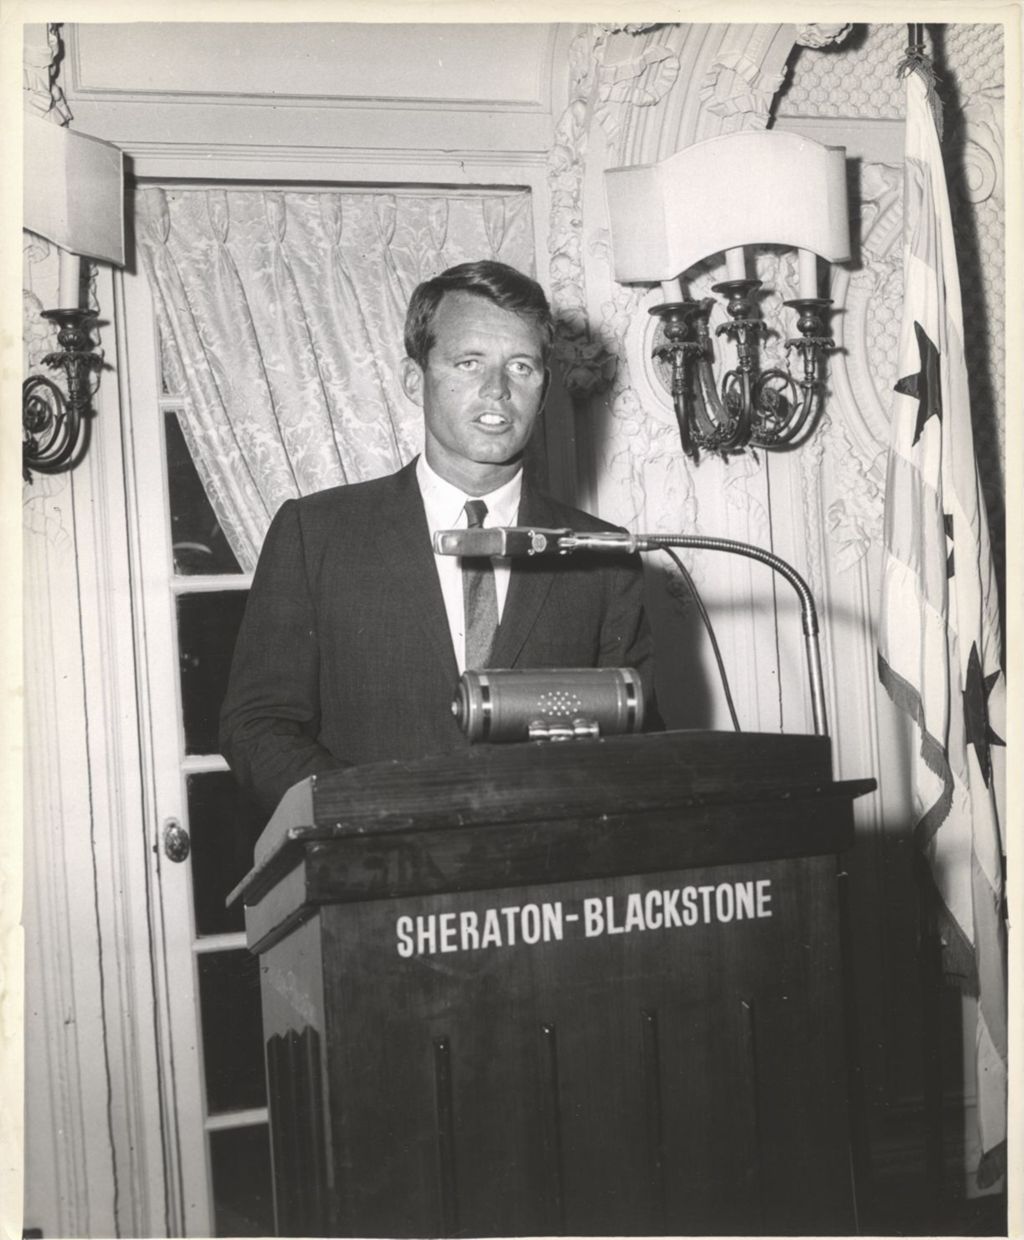 Robert Kennedy at a podium